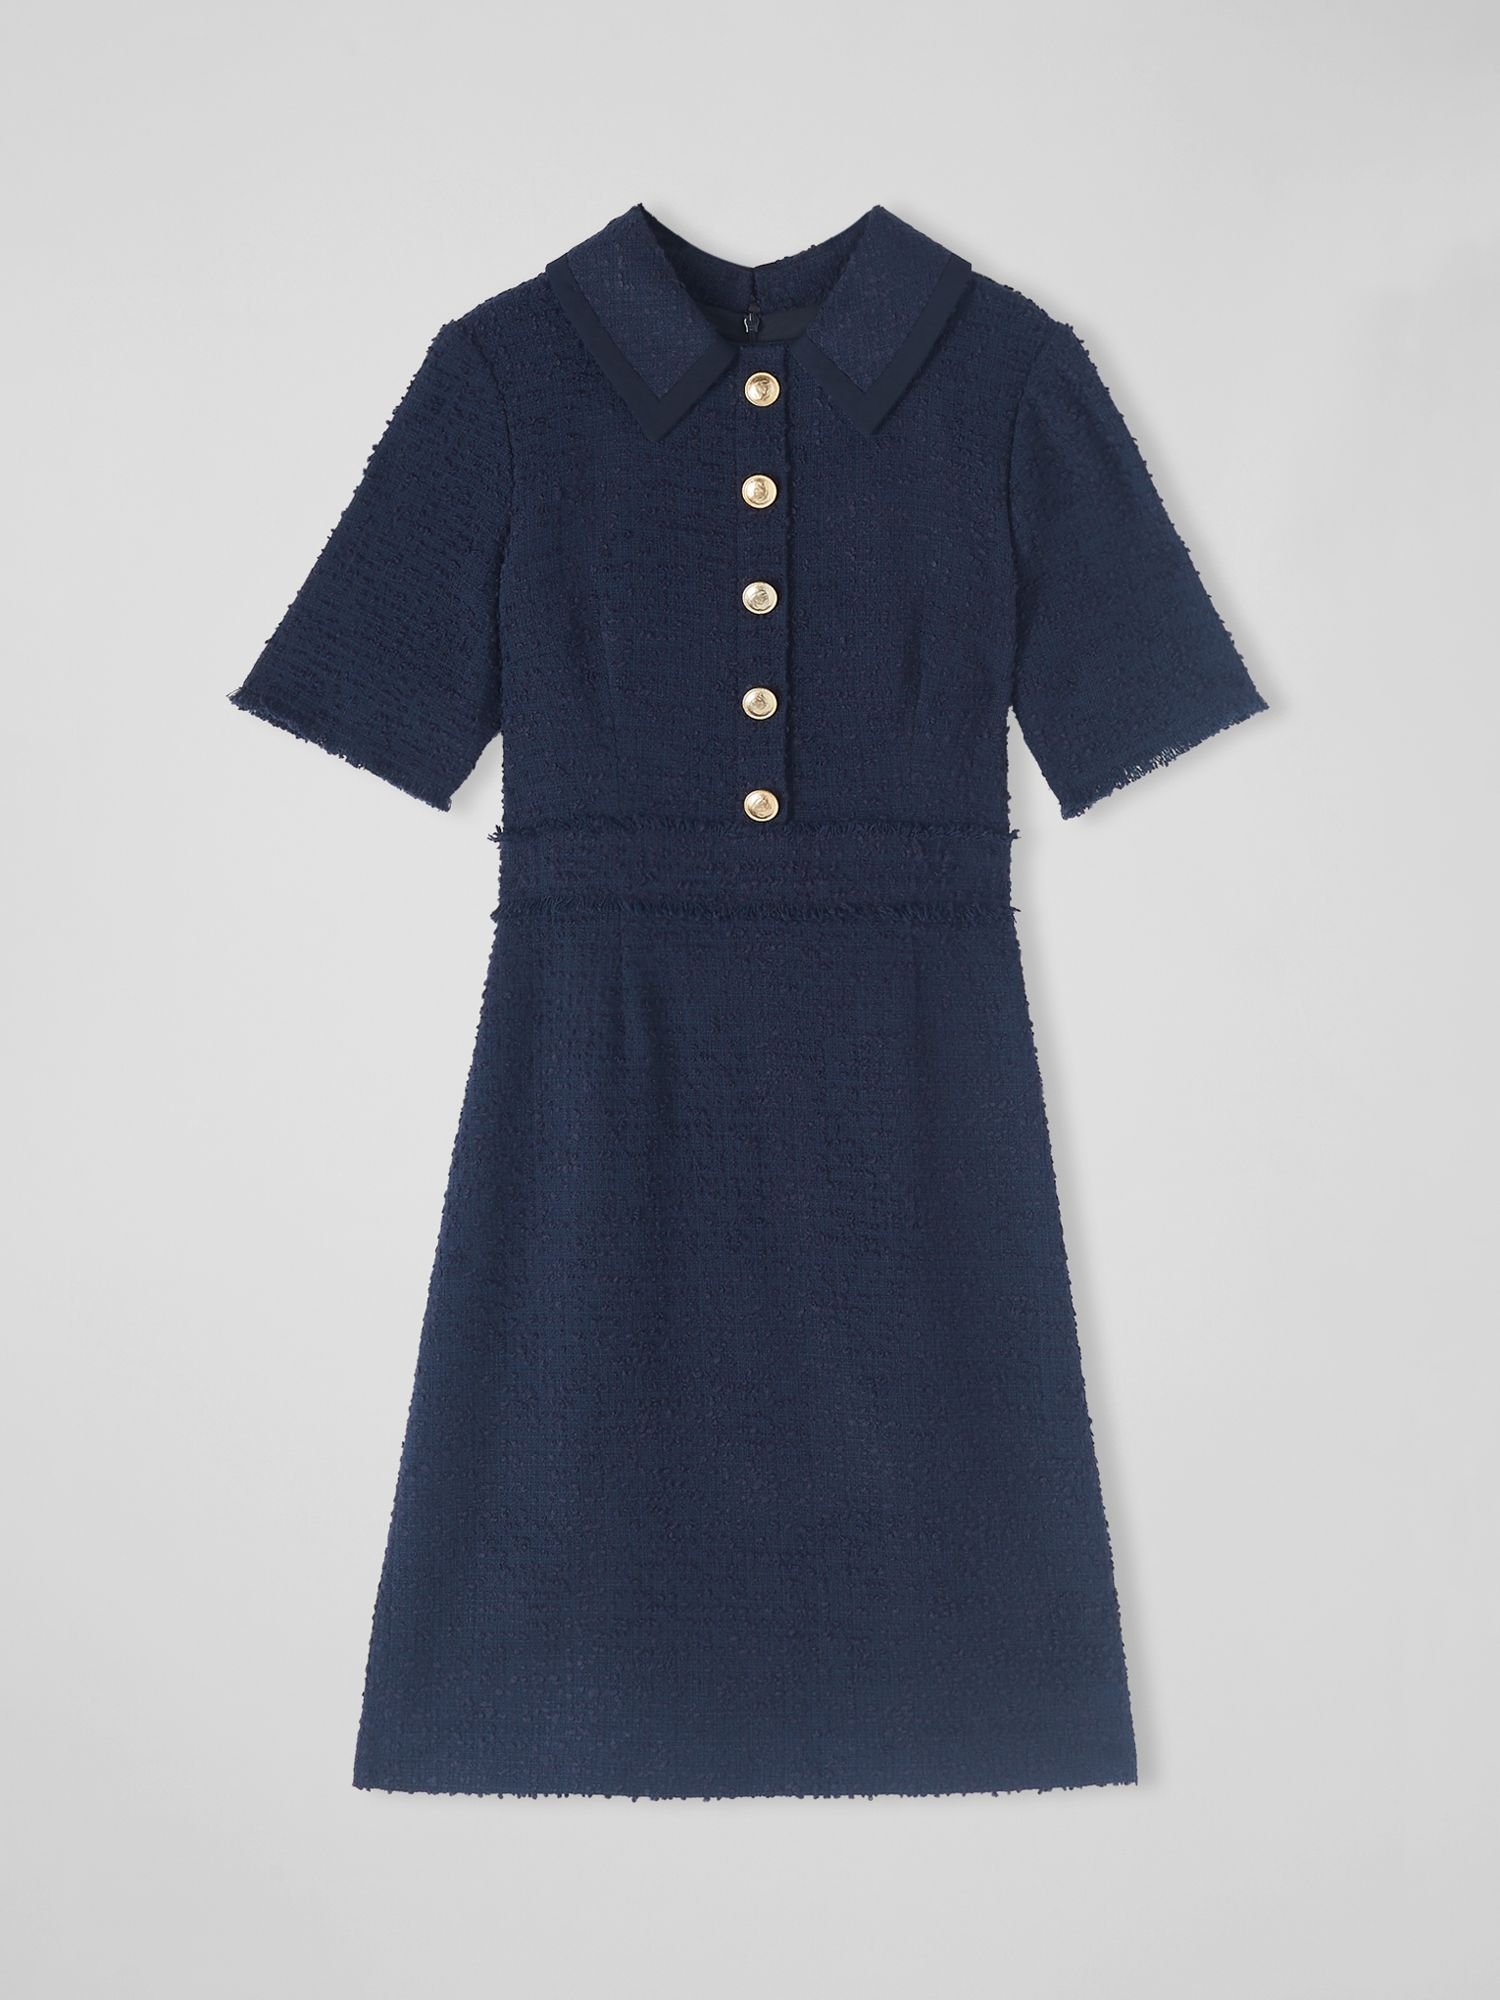 LK Bennett Hanna Navy Italian Tweed Dress (Dresses,Knee Length)